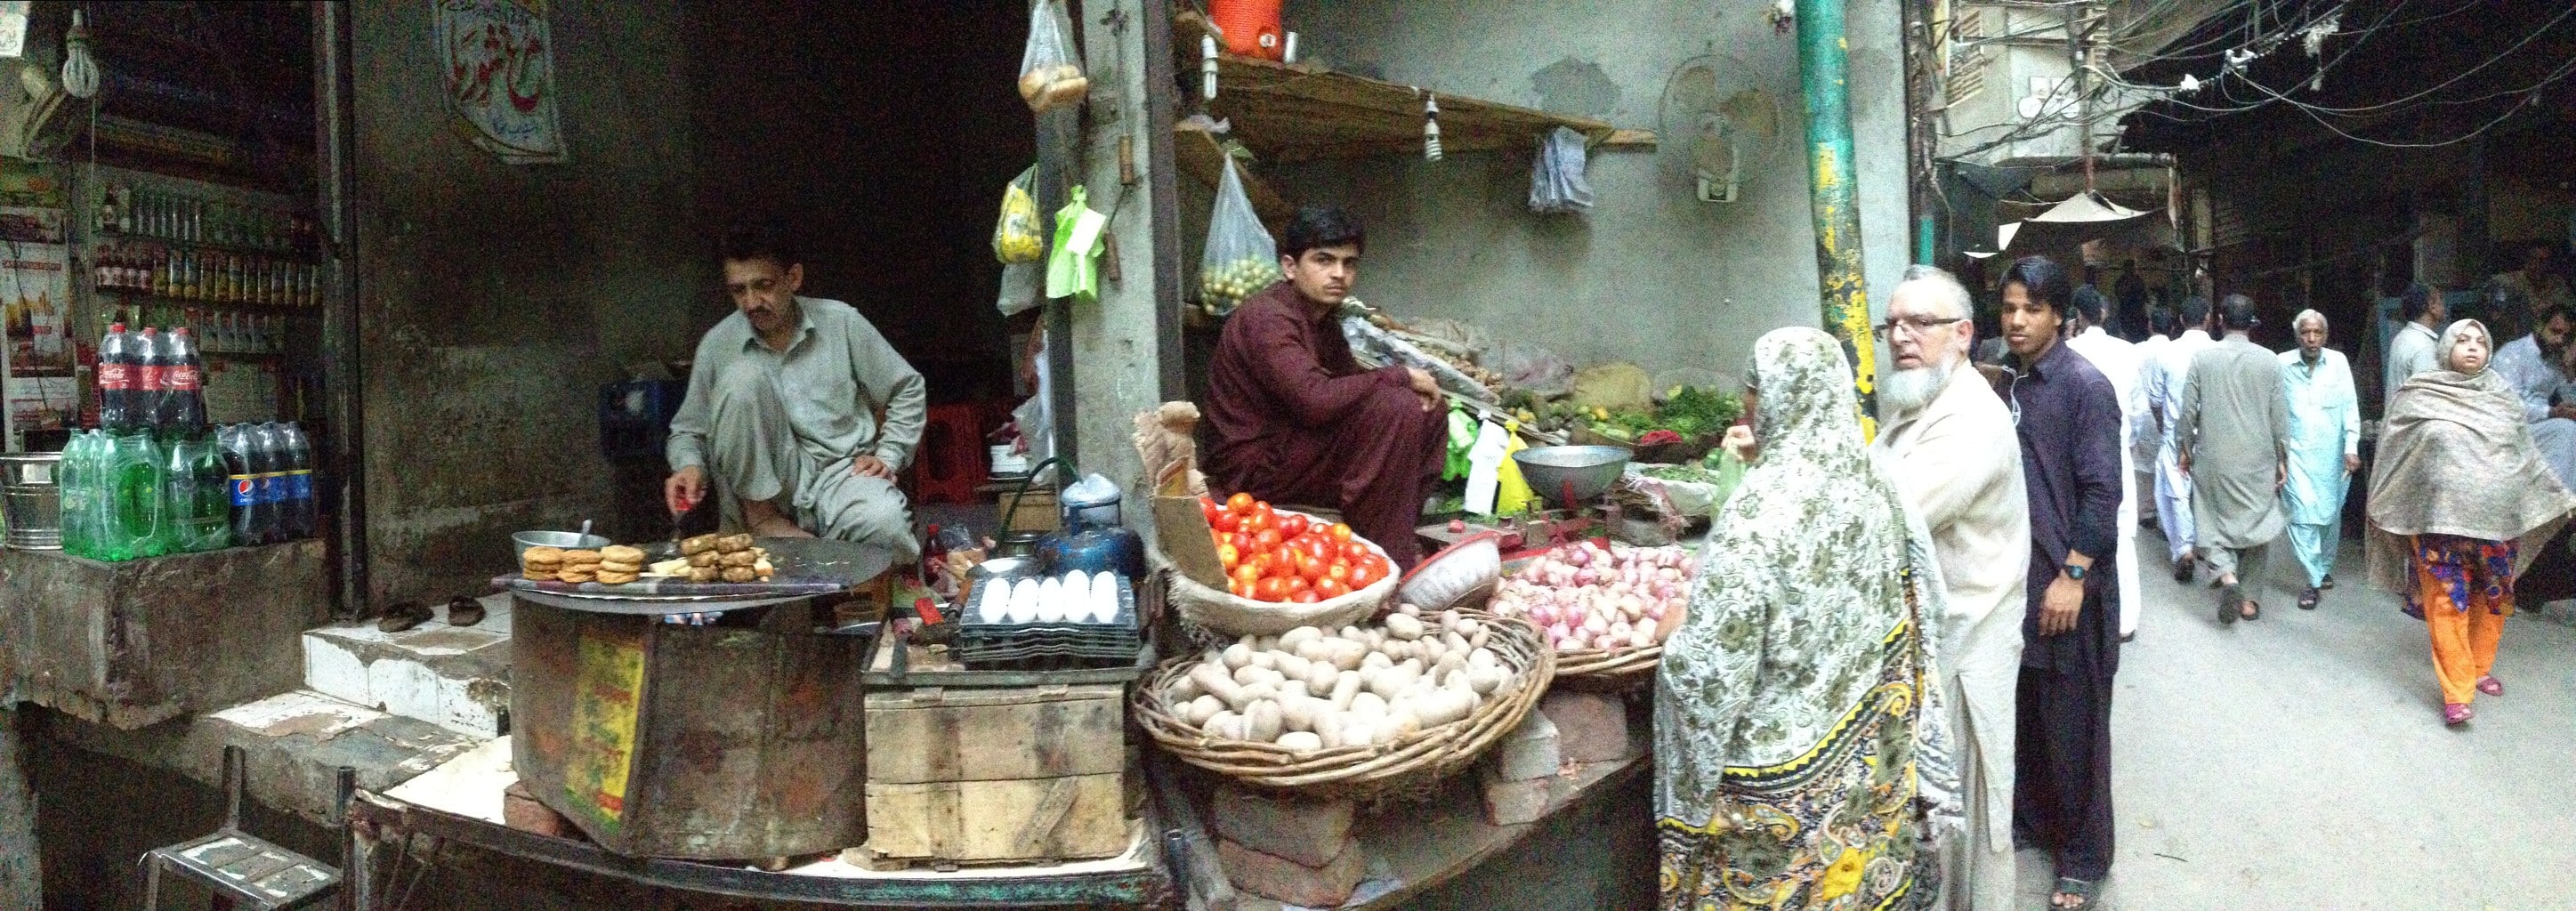 Food market in Lahore